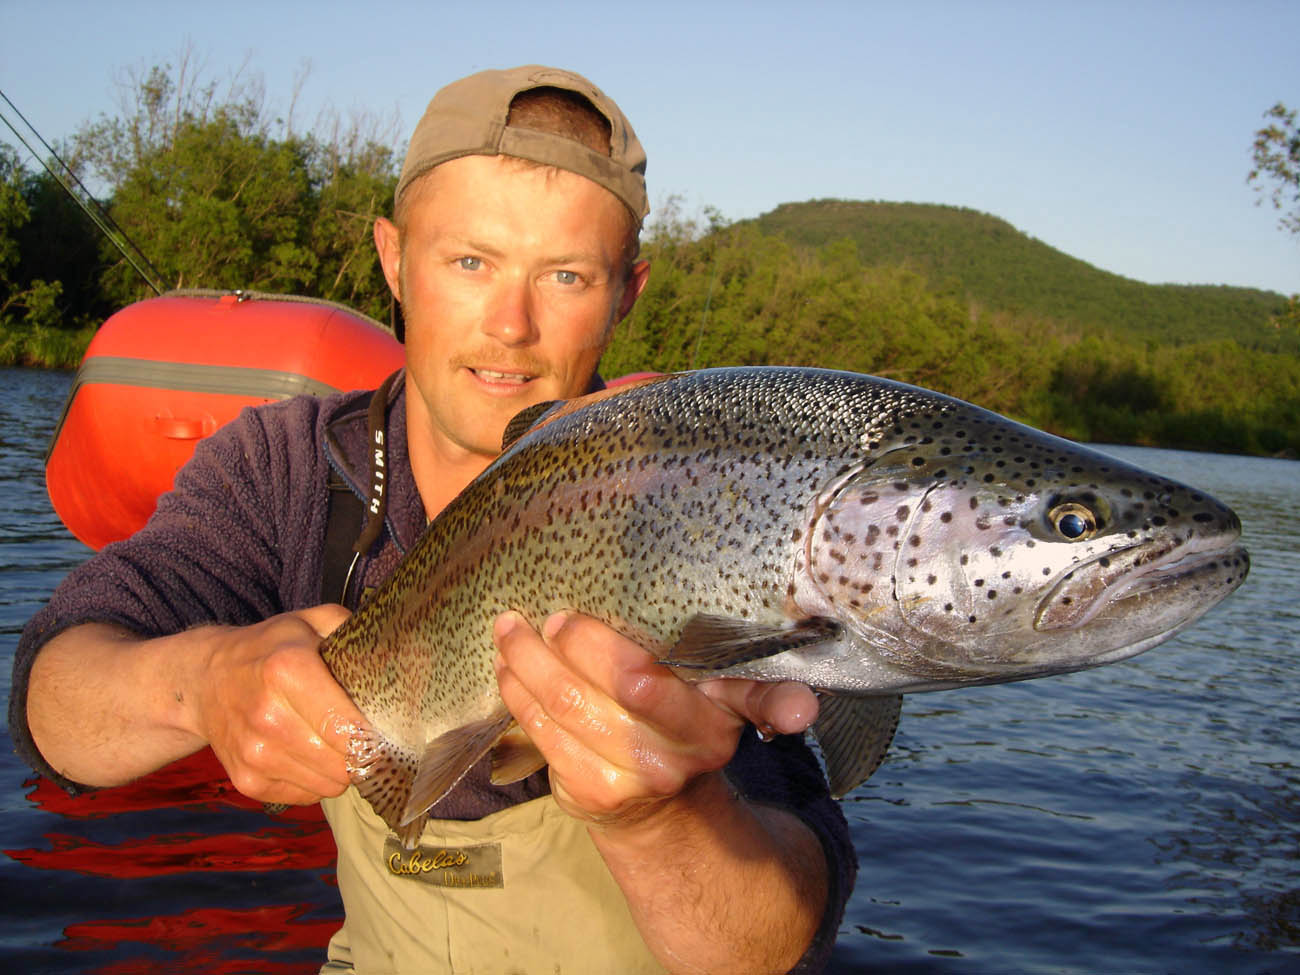 рыбалка на Камчатке, реке Жупанова, лагерь Дзензур